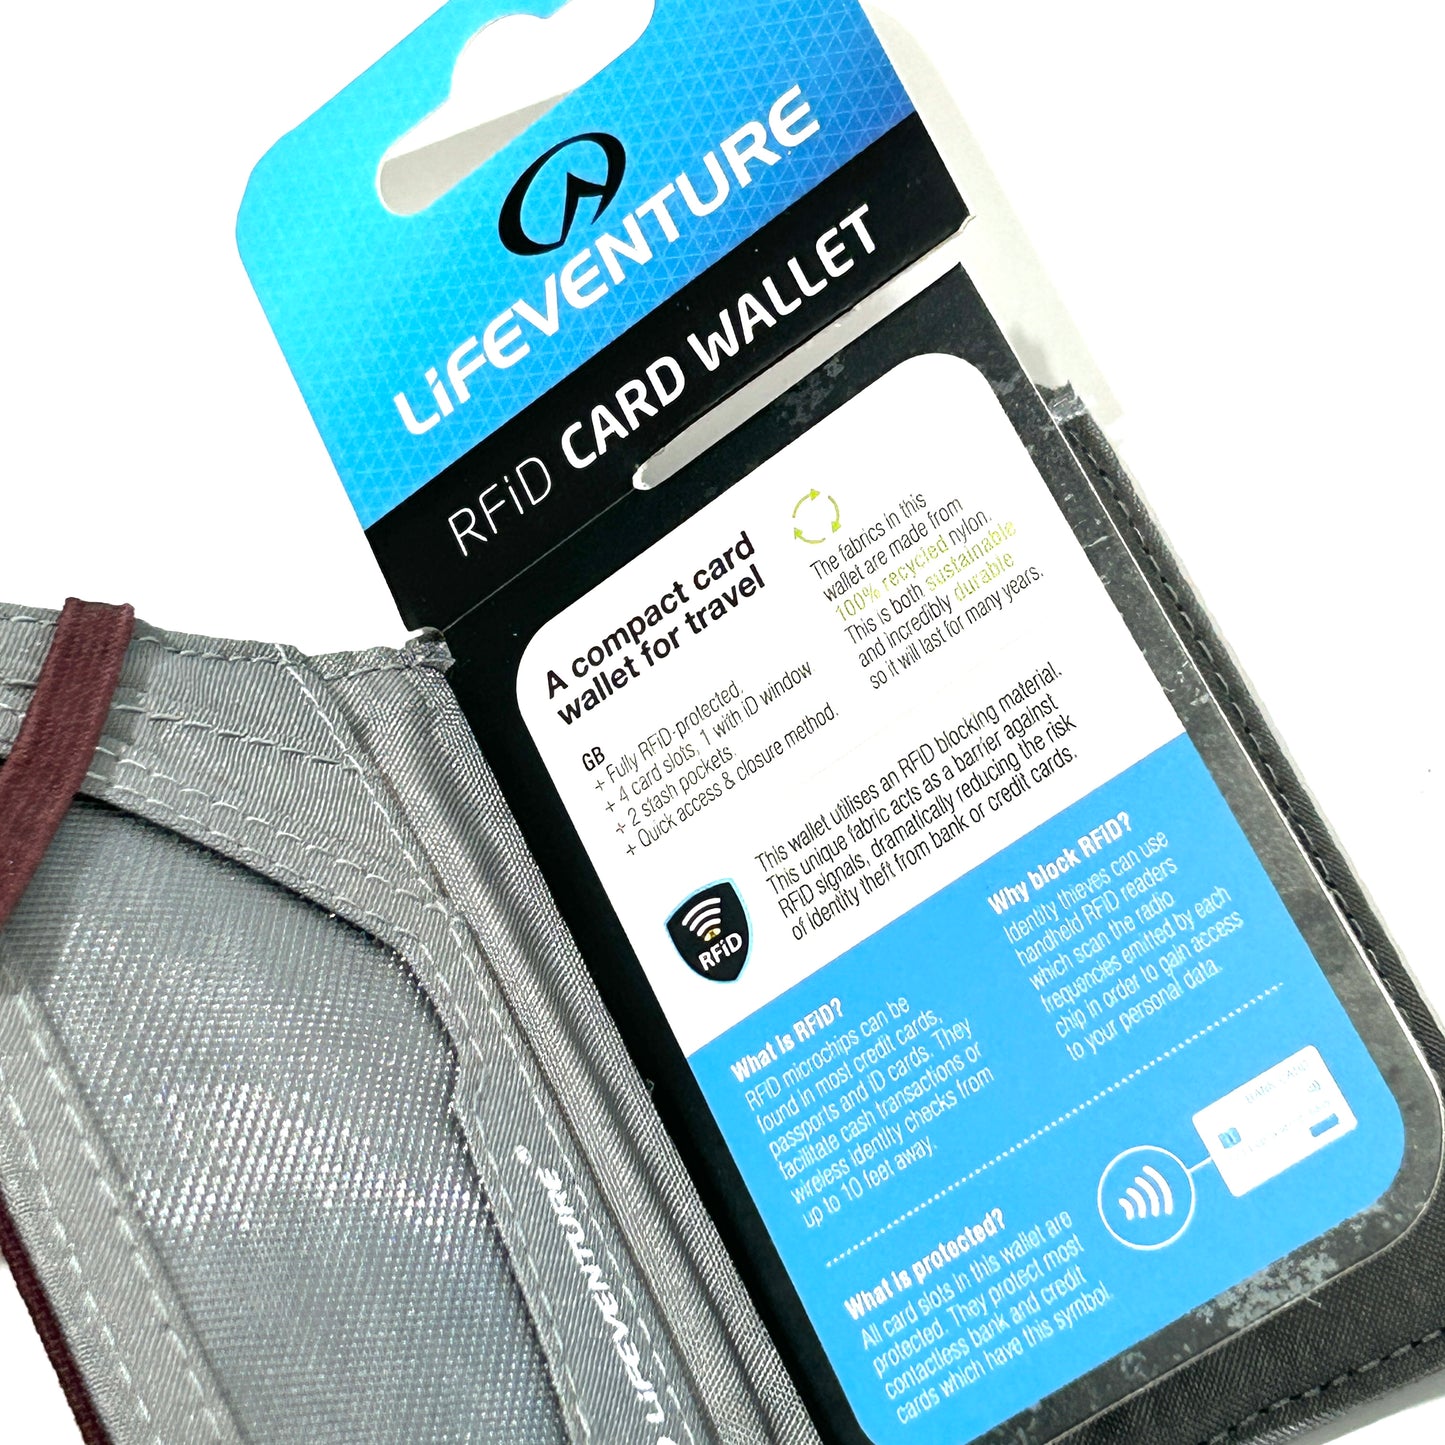 LiFEVENTURE RFiD Card Wallet